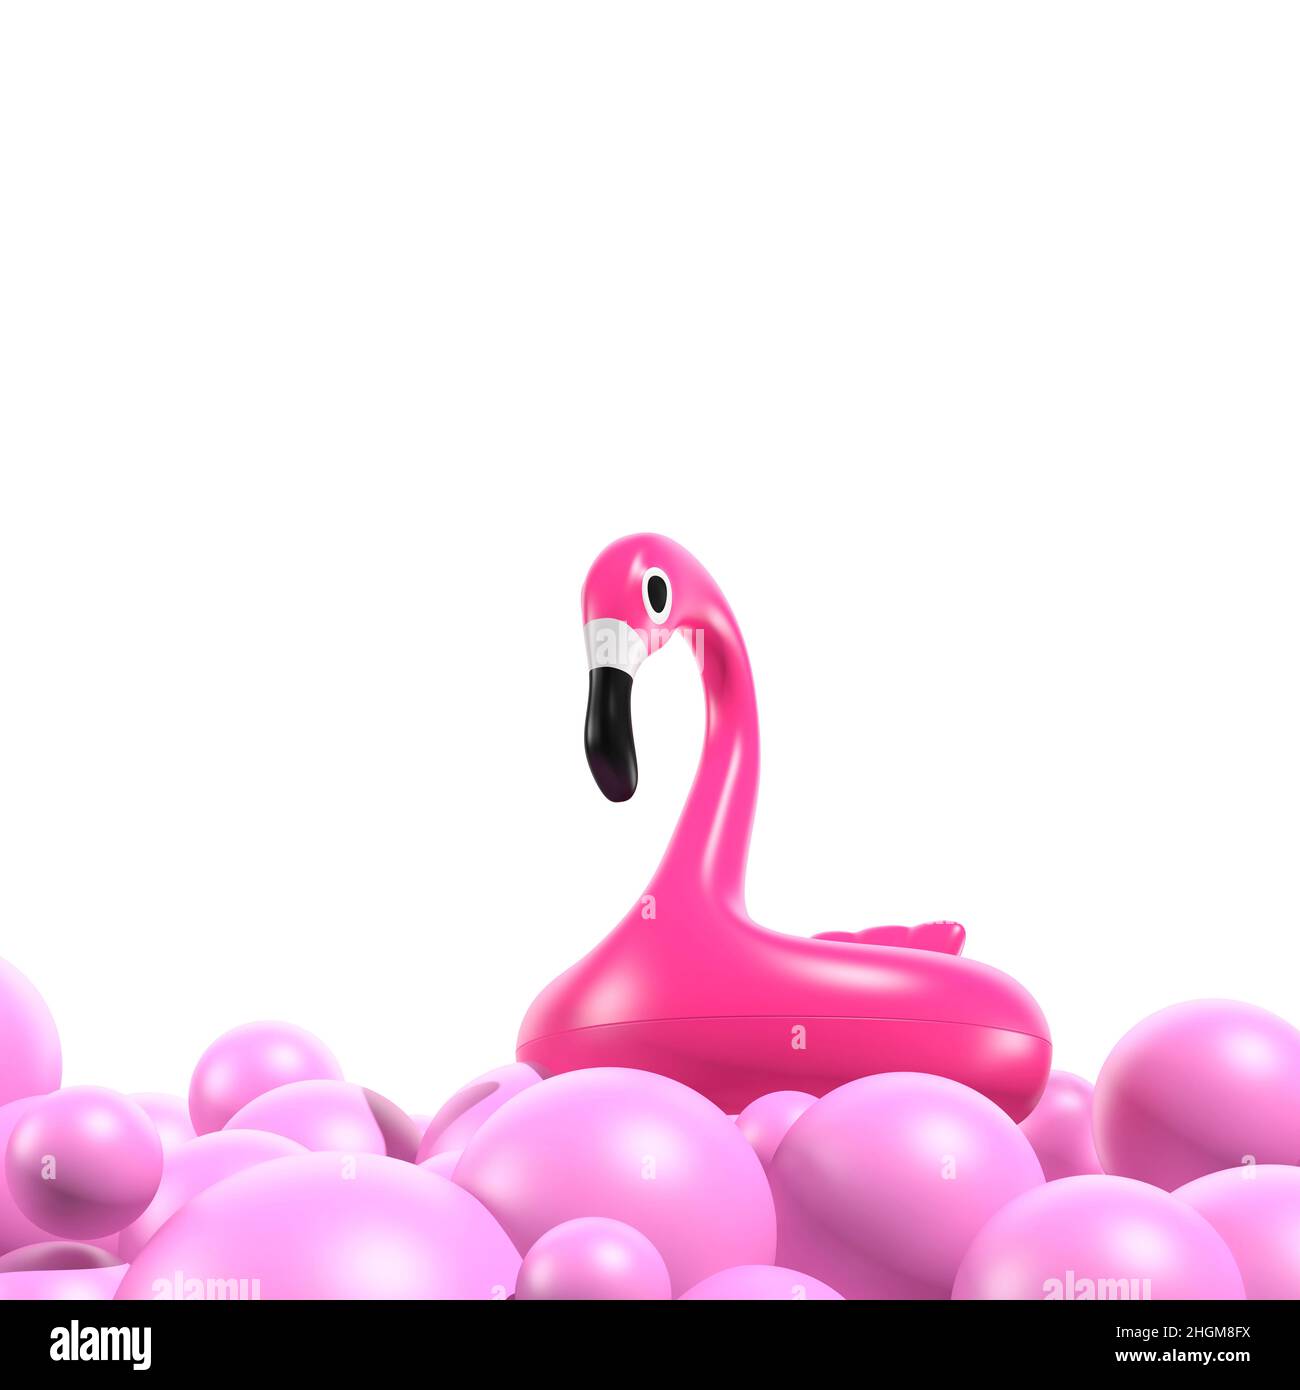 Inflatable flamingo among balloons, illustration Stock Photo